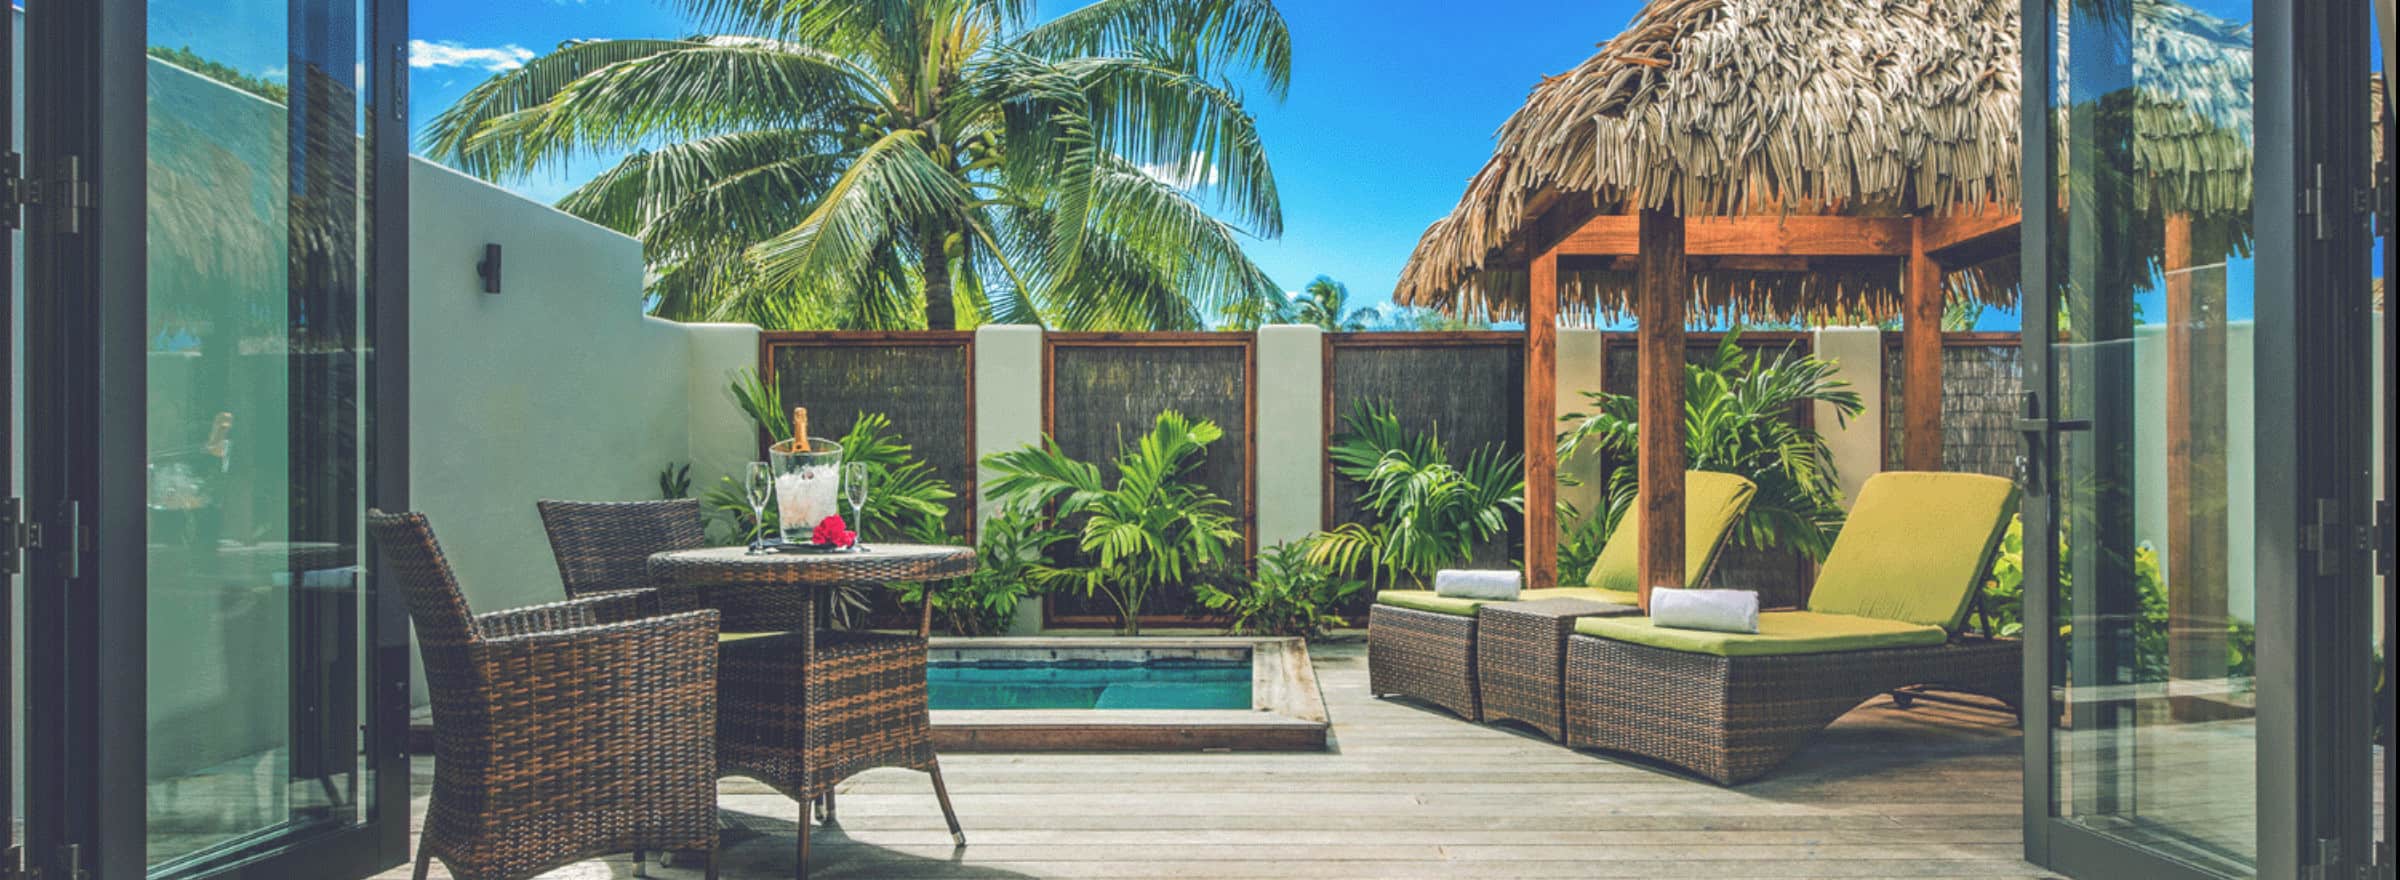 Cook Islands plunge pool villas